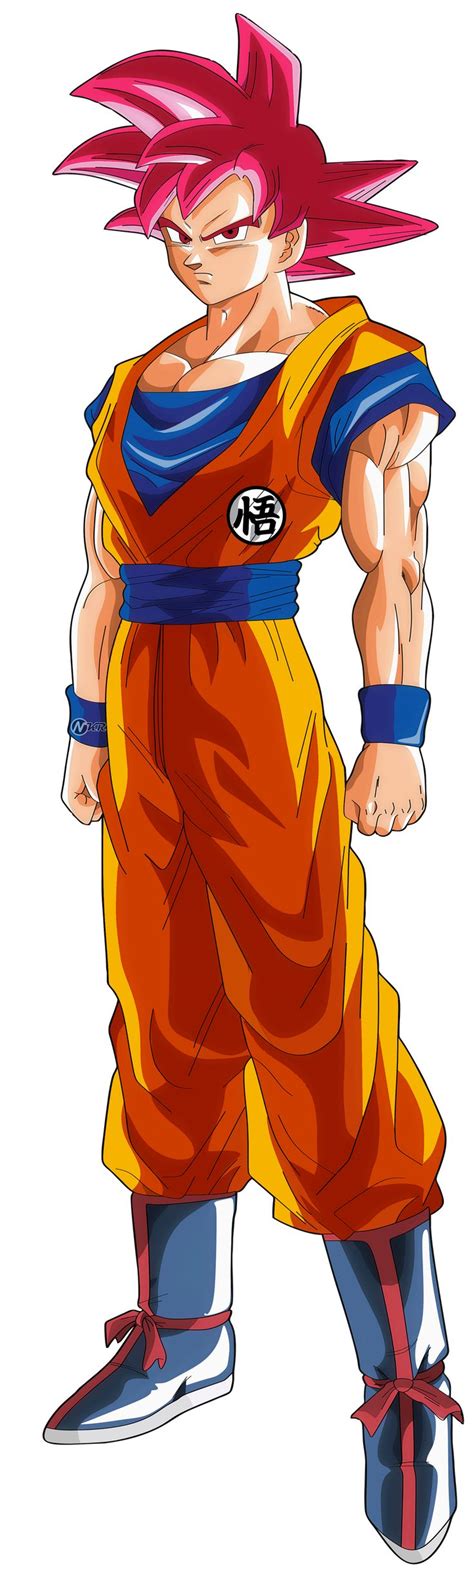 Goku Ssj God By Naironkr On Deviantart Anime Dragon Ball Super Goku